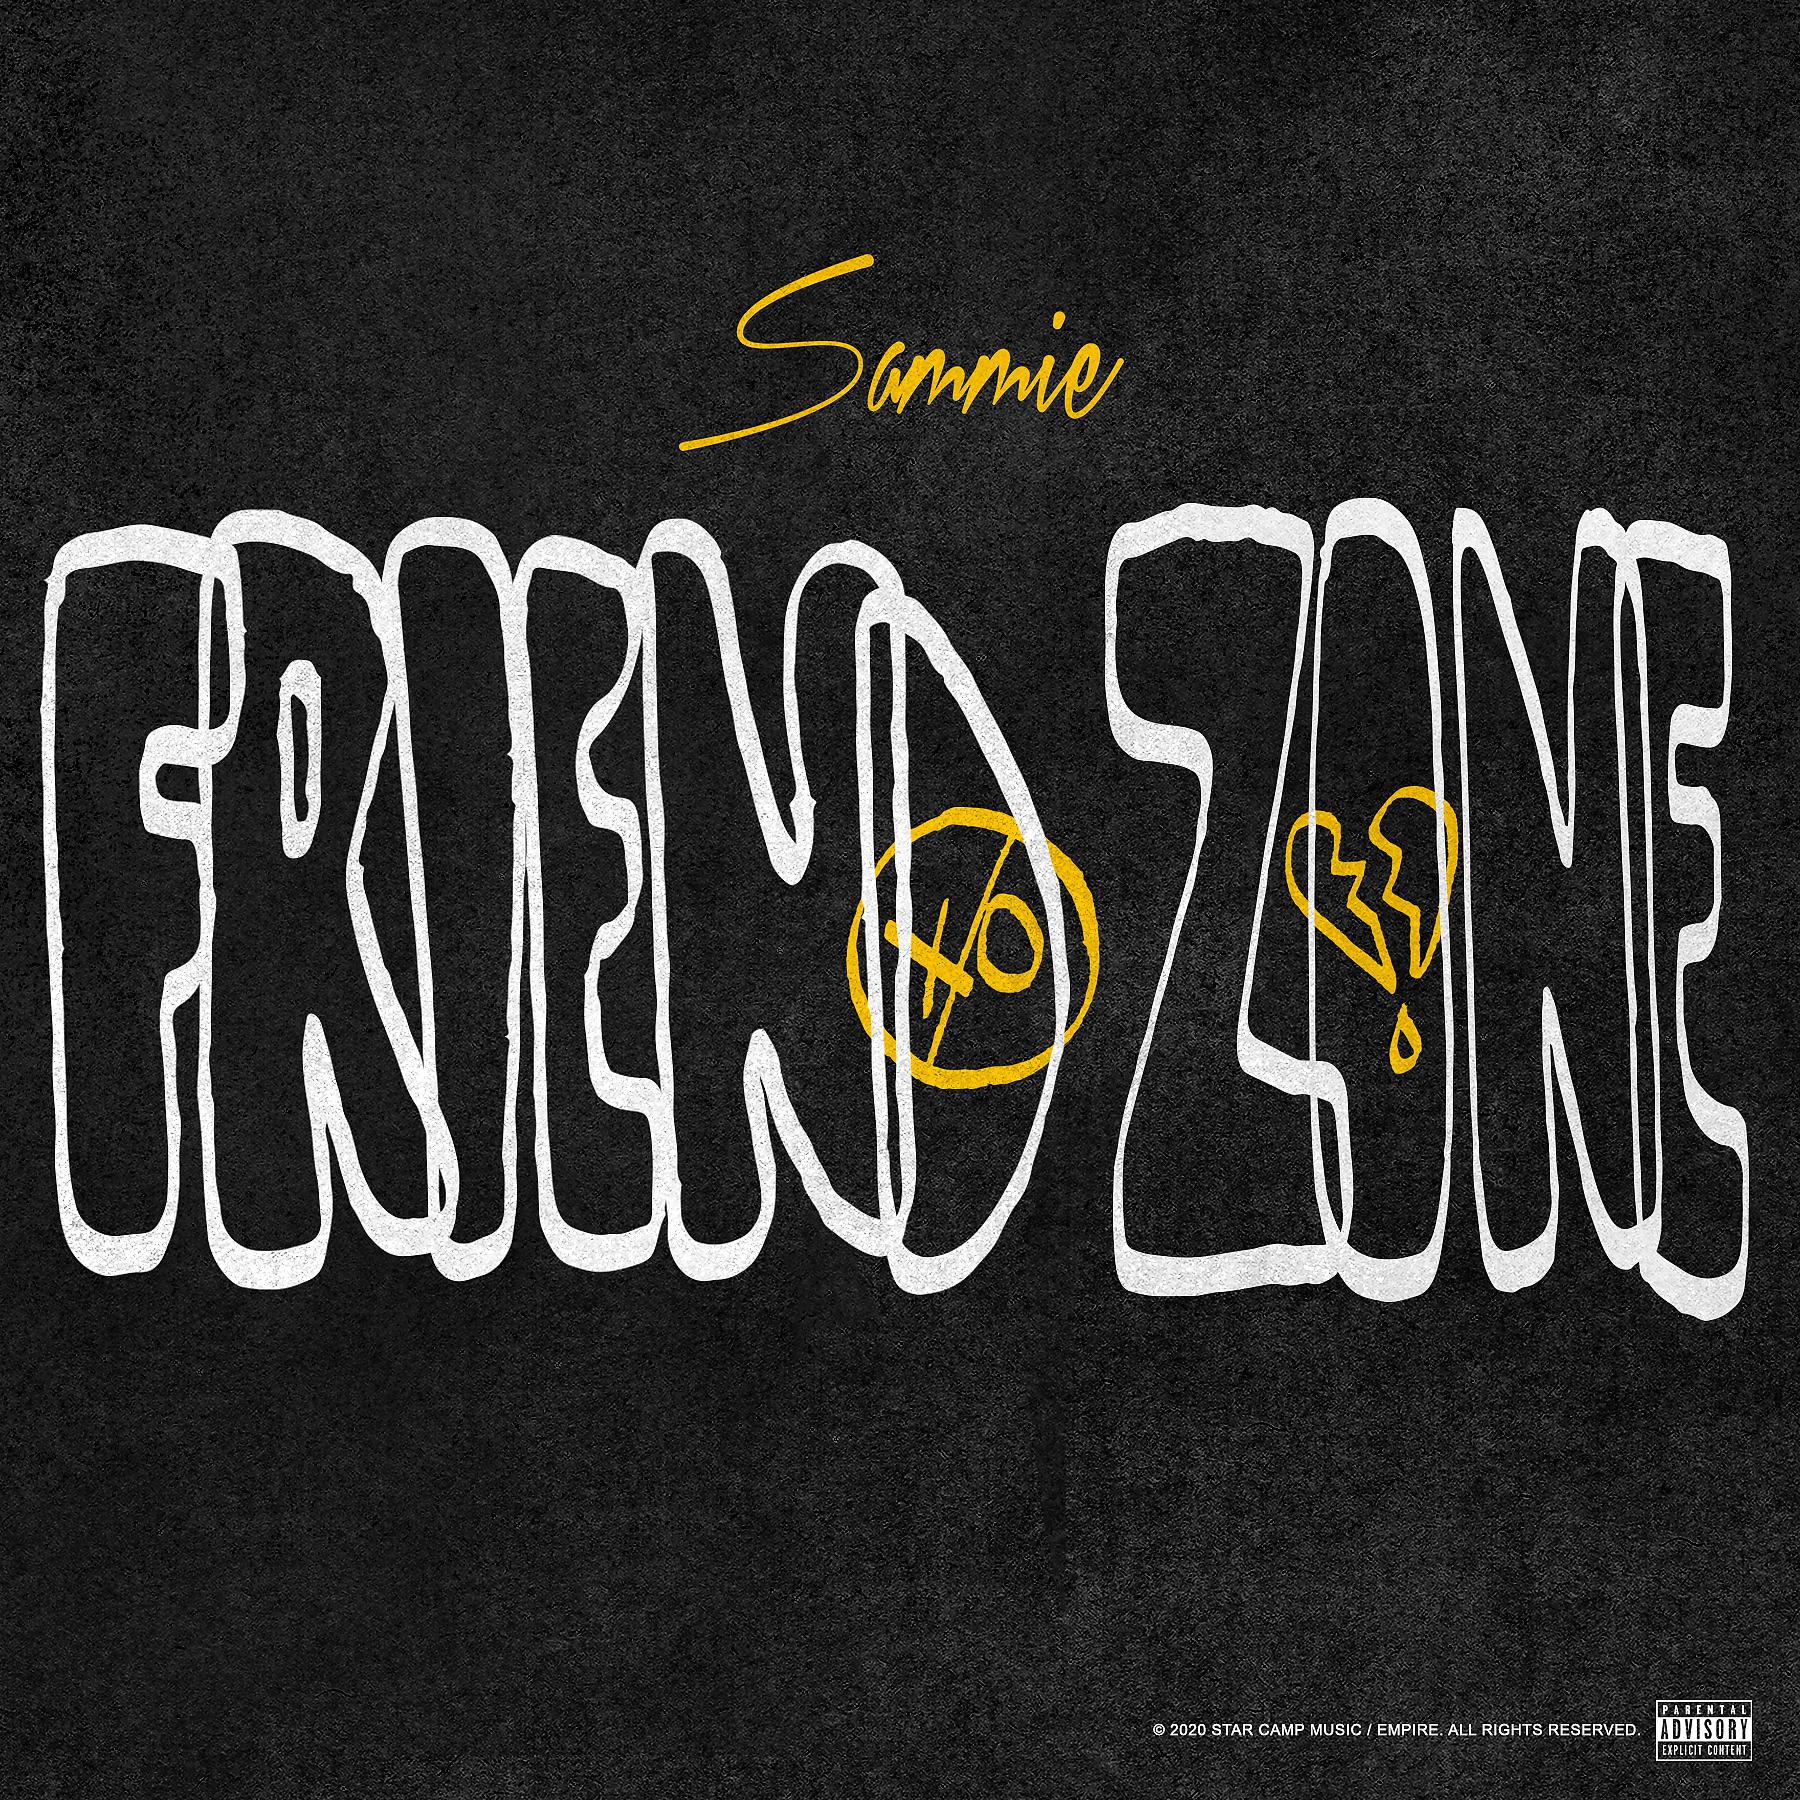 Постер альбома Friend Zone